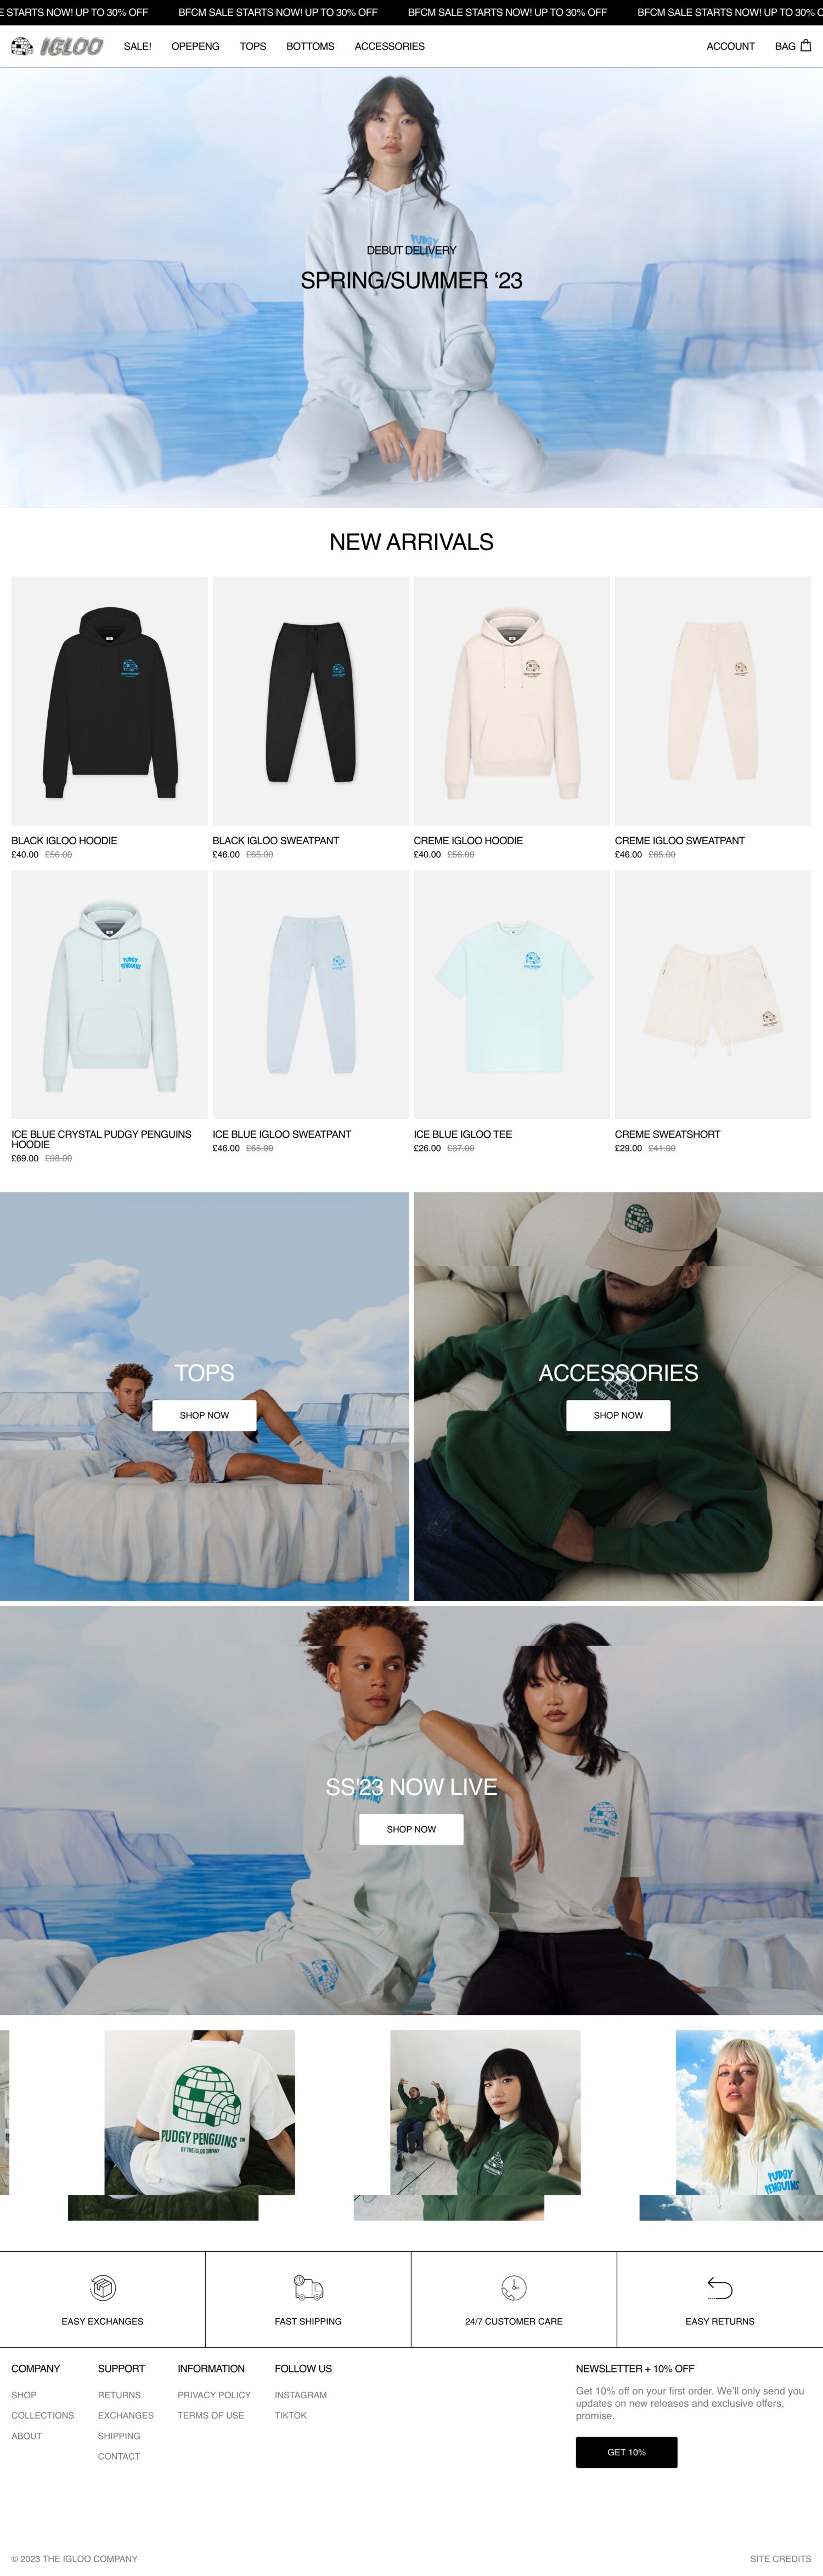 Shopify Website Design Inspiration - Igloo